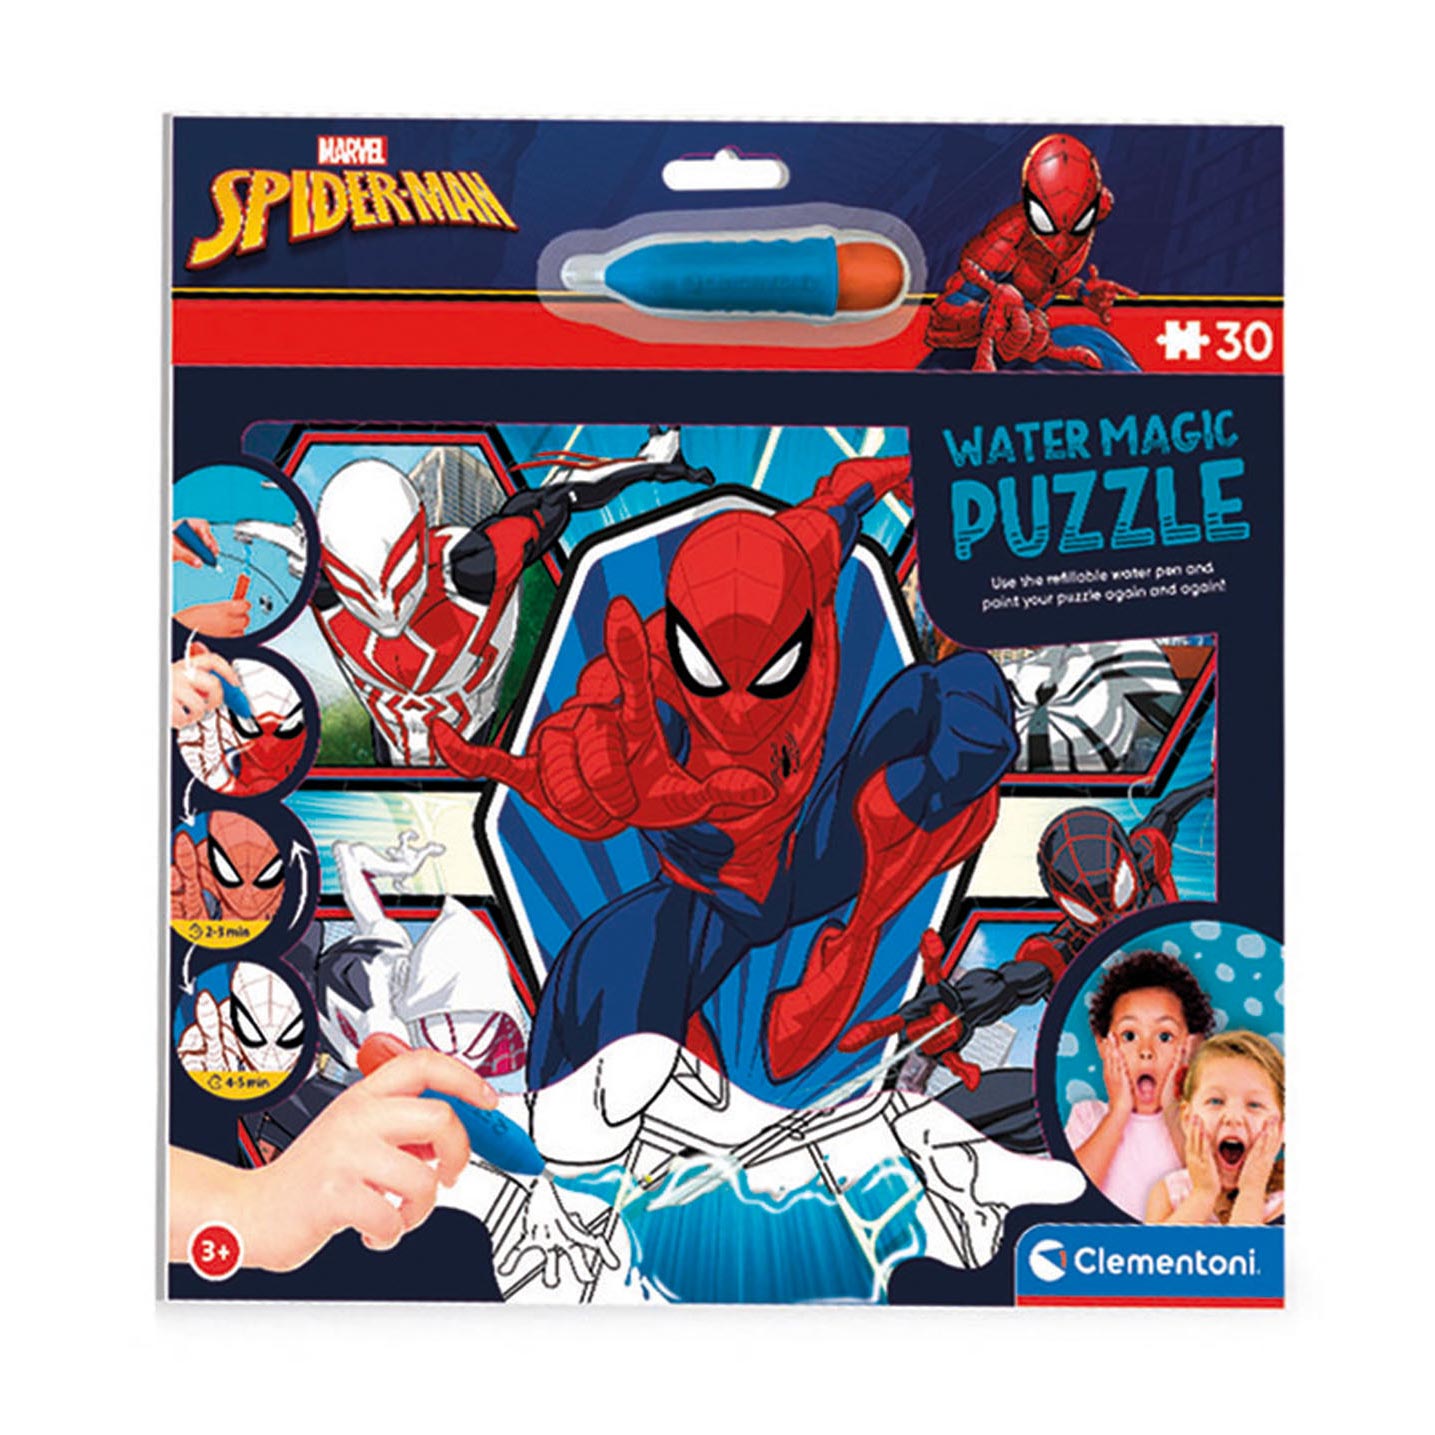 Clementoni Water Magic Puzzle Spiderman, 30pcs.